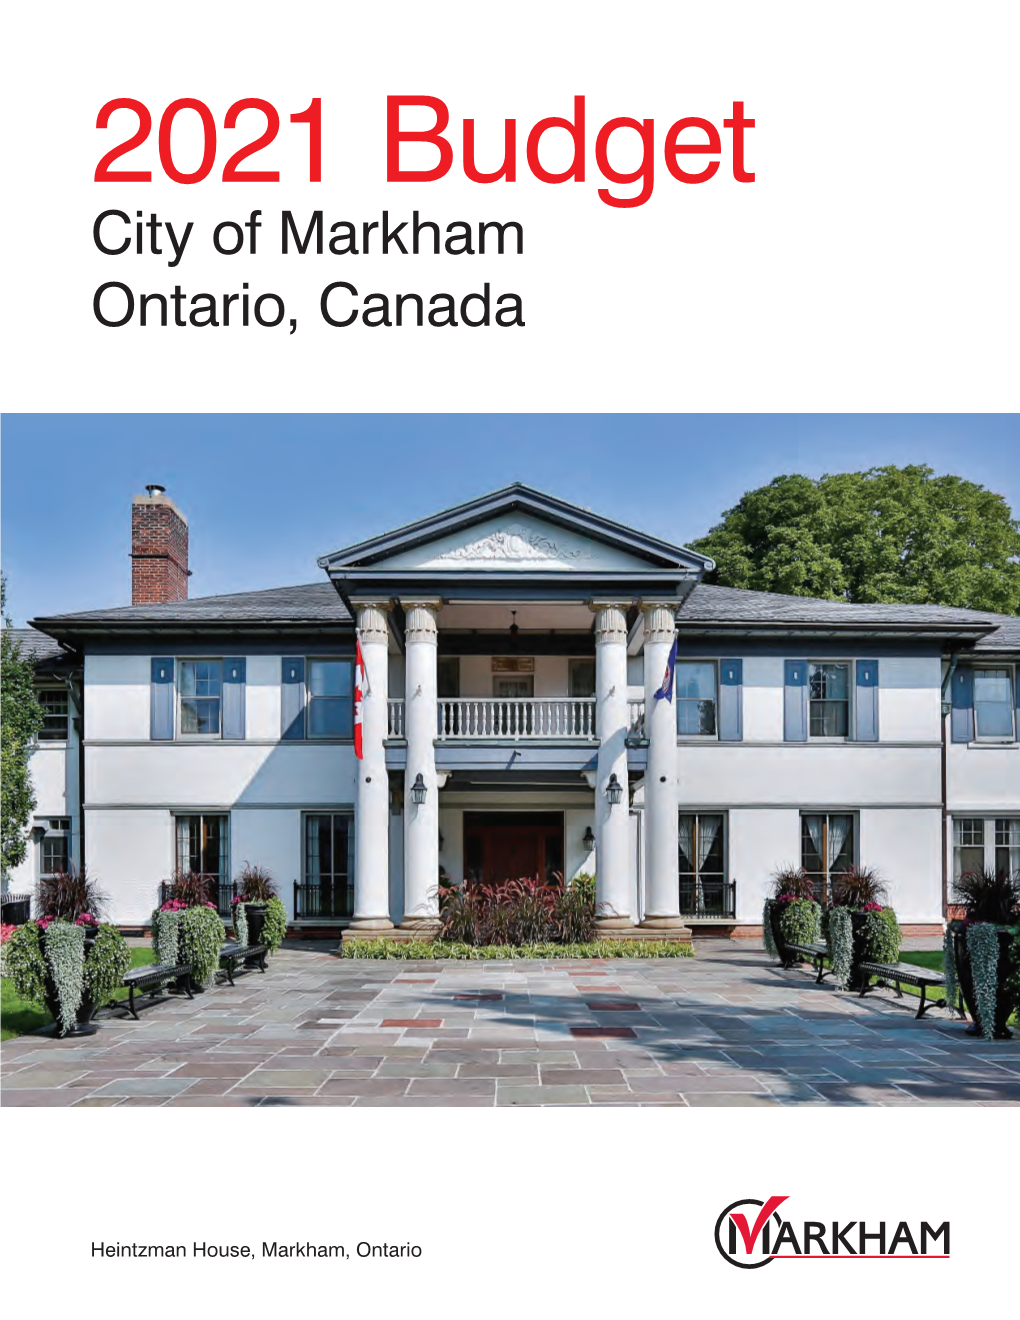 City of Markham 2021 Budget